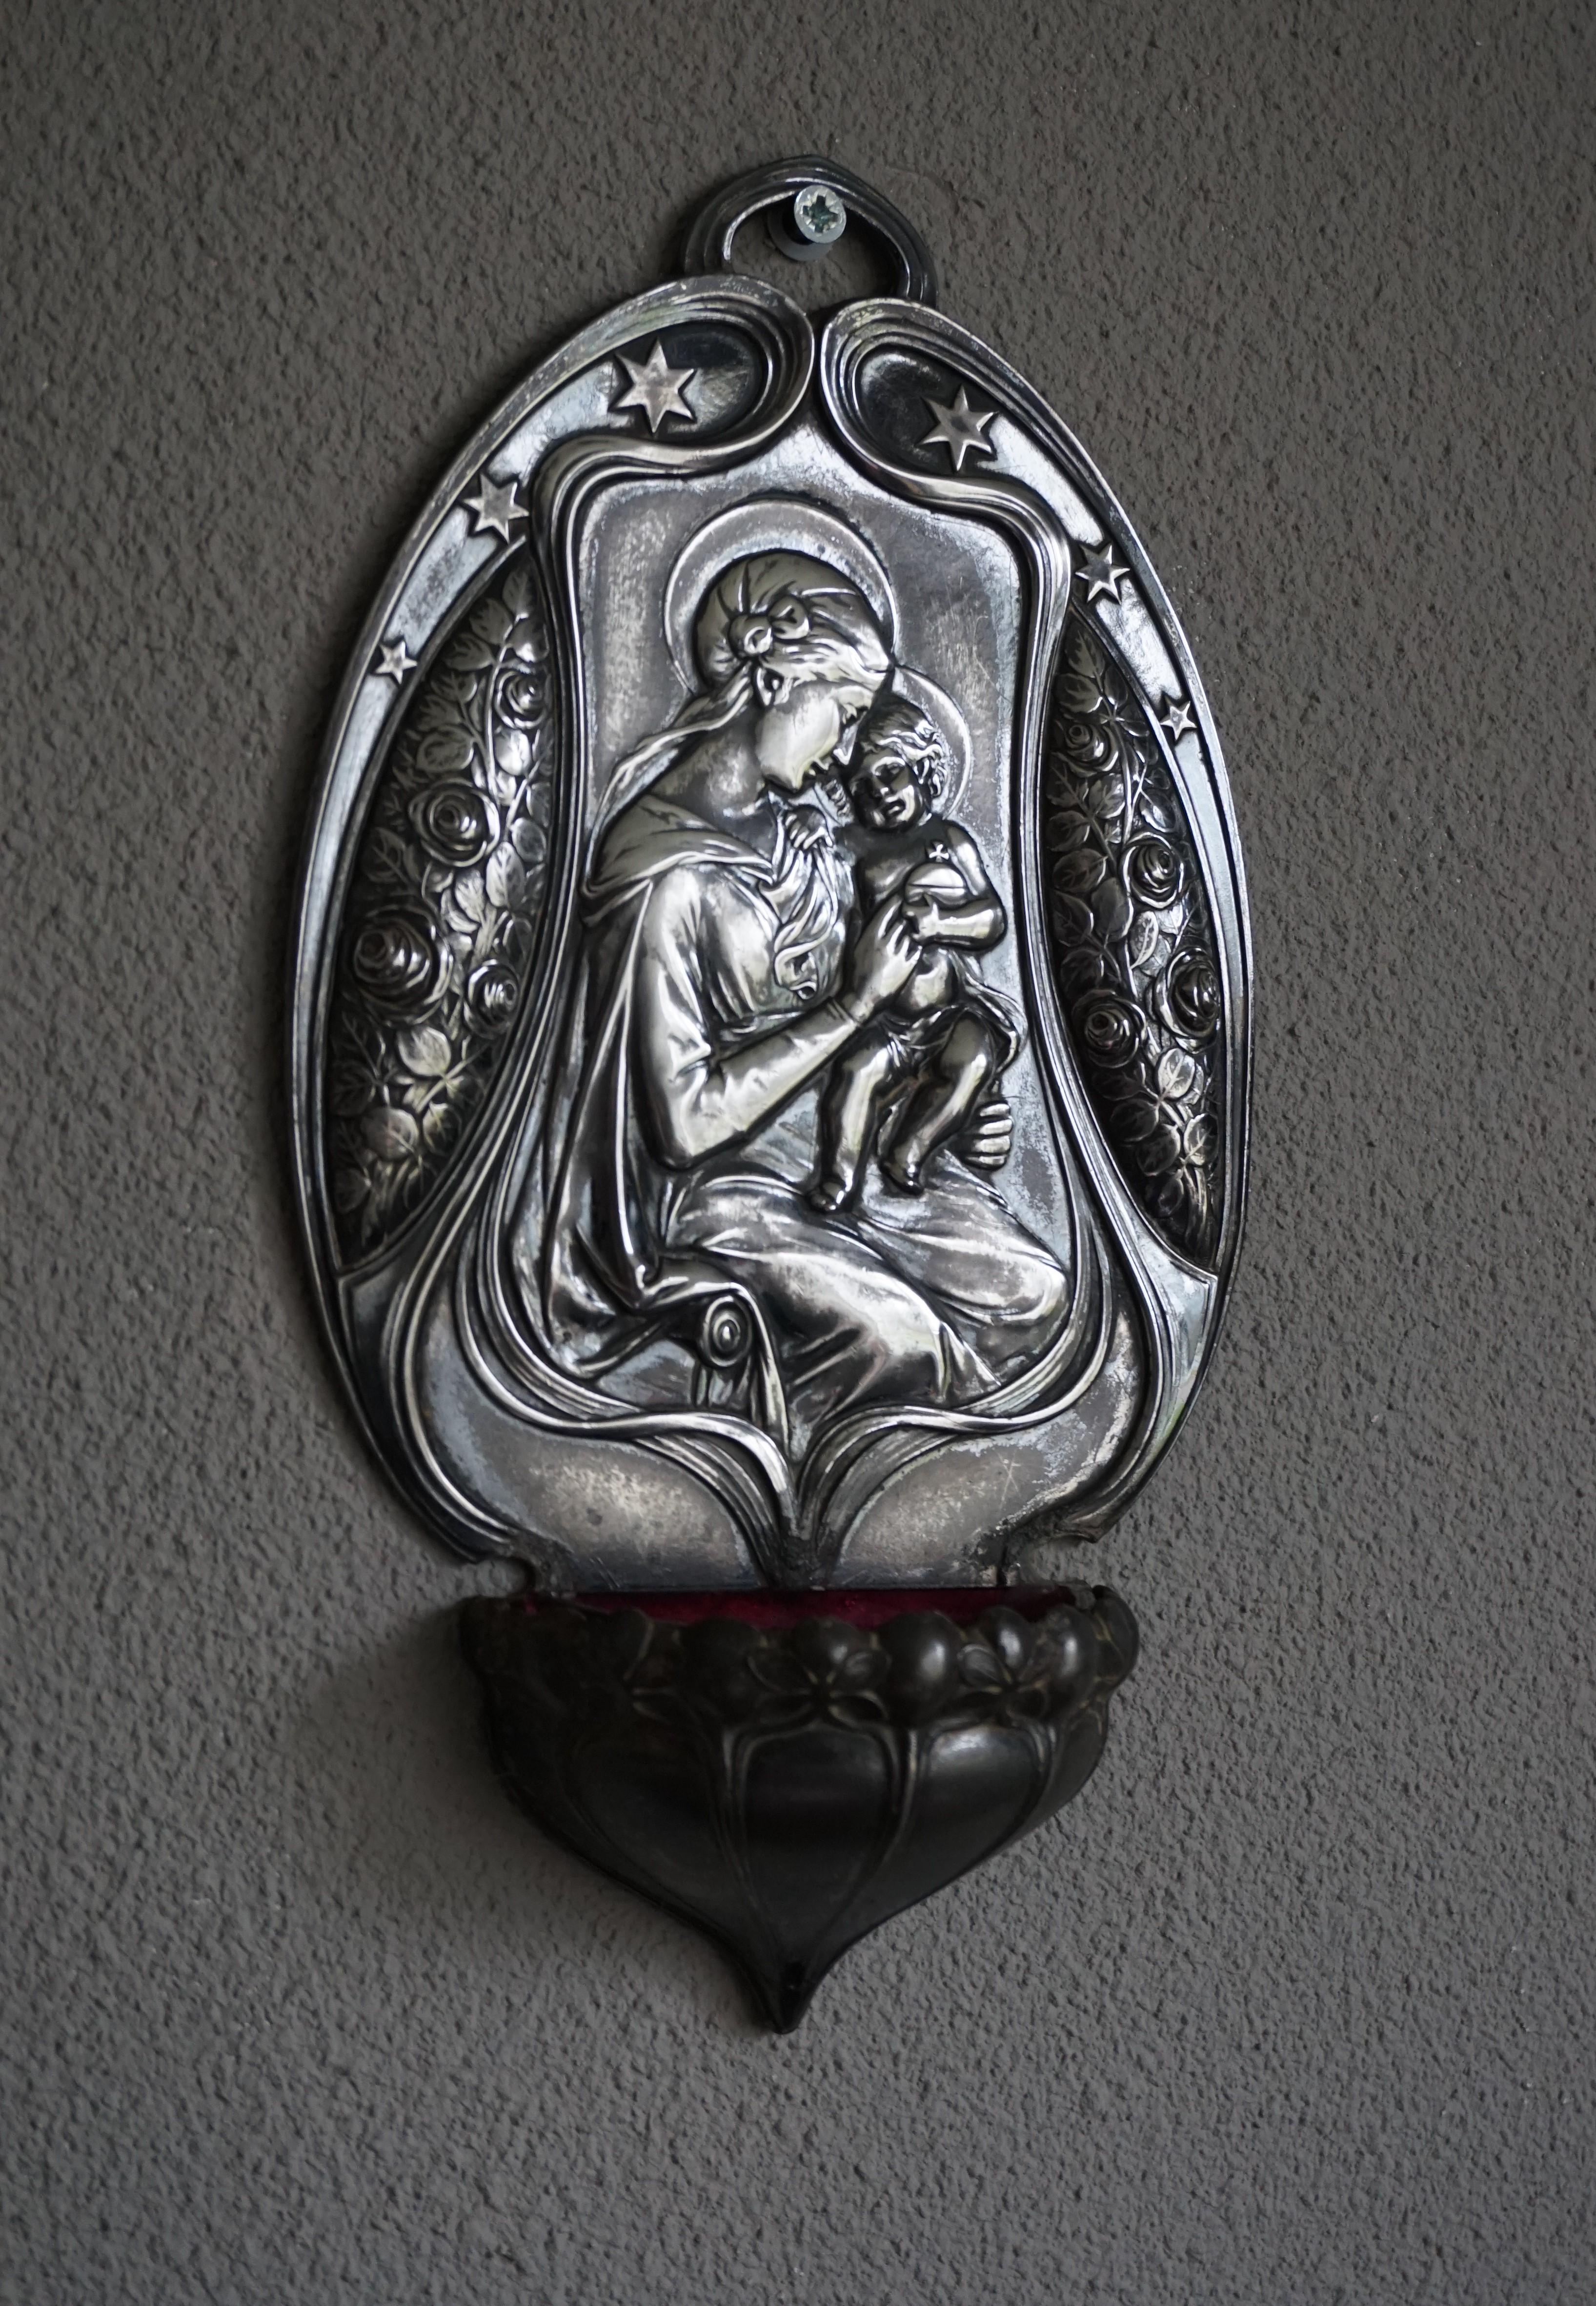 Jugendstil WMF Marked and Silvered Holy Water Font Depicting Mary & Child Jesus For Sale 1